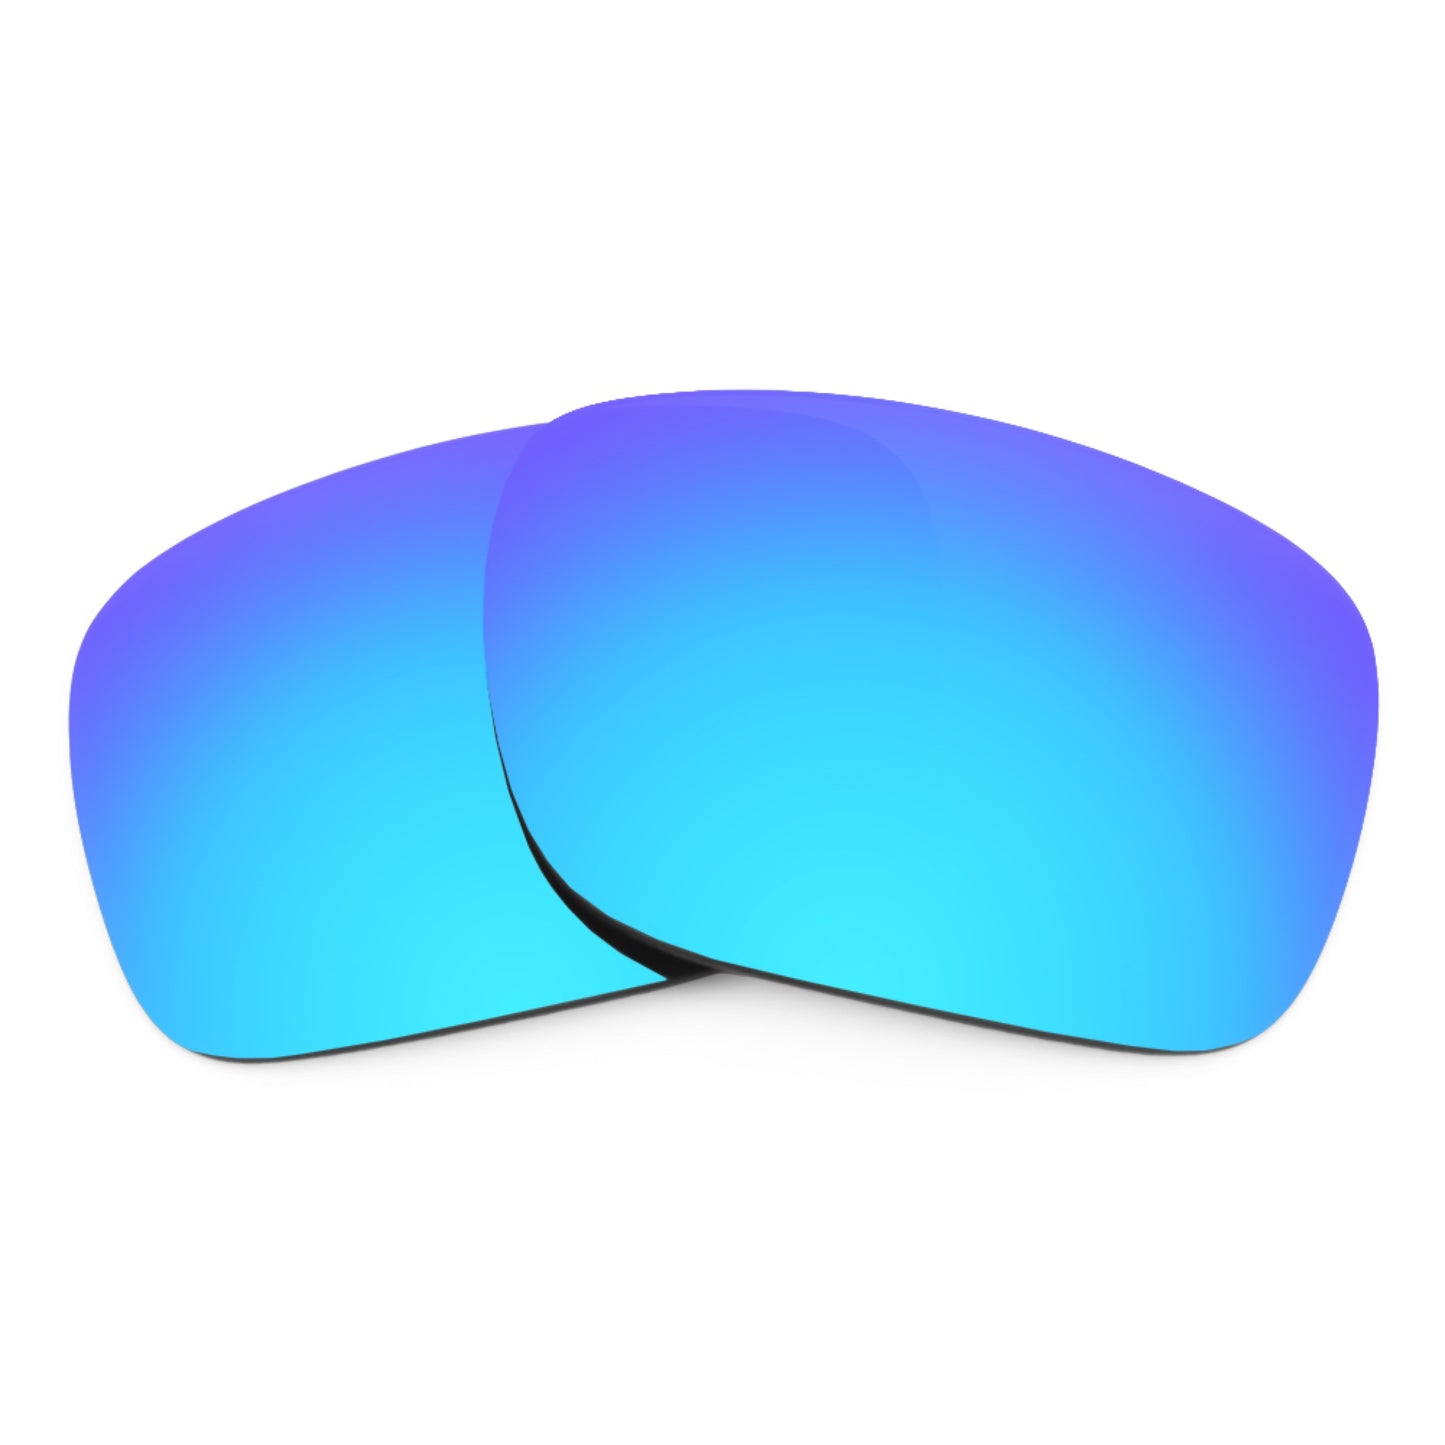 Revant replacement lenses for Oakley Targetline (Low Bridge Fit) Non-Polarized Ice Blue